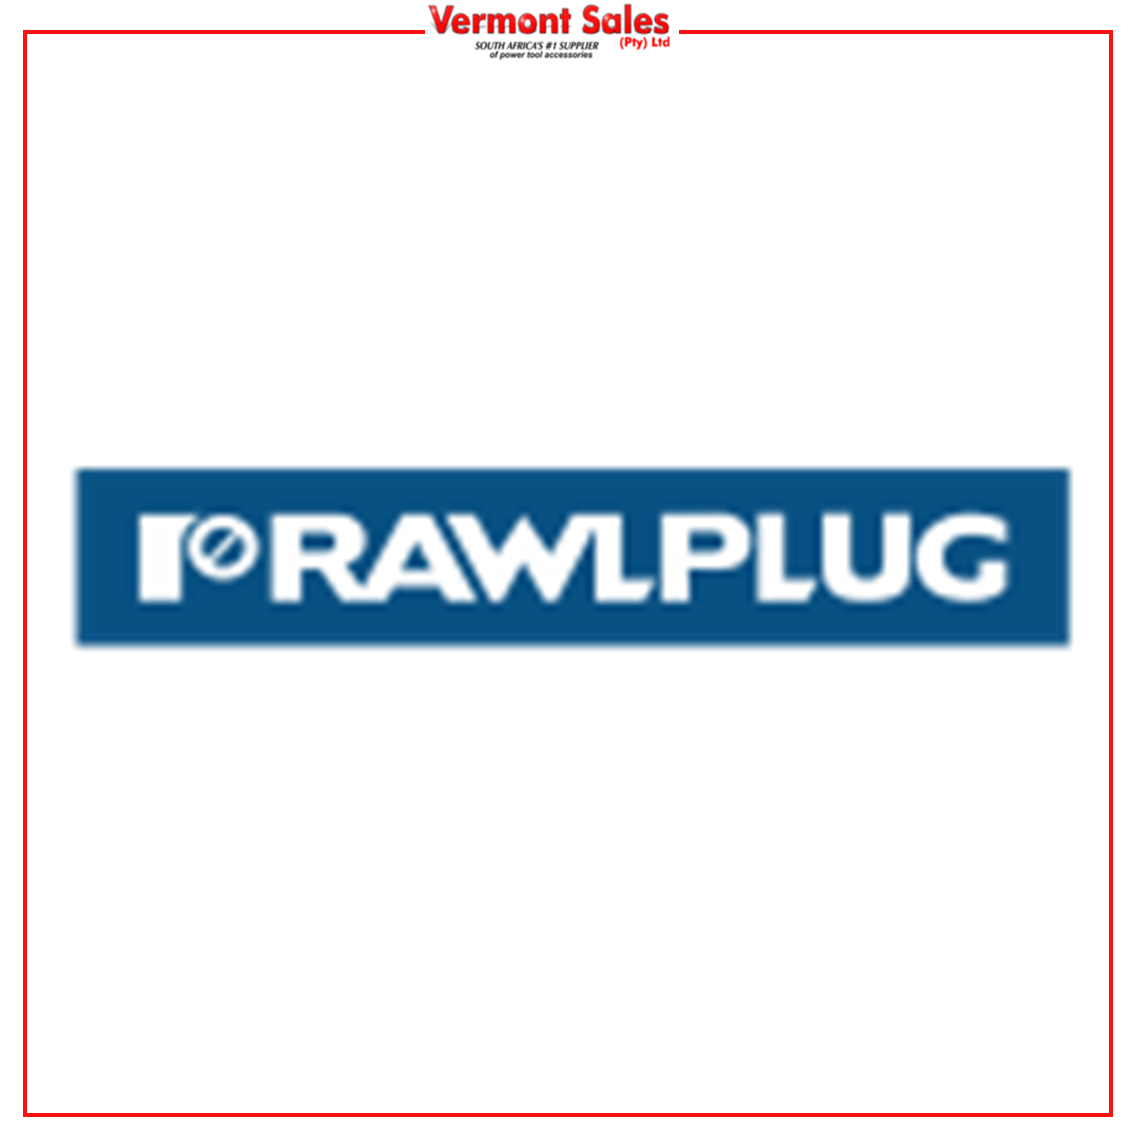 VERMONT - Rawlplug Catalogue